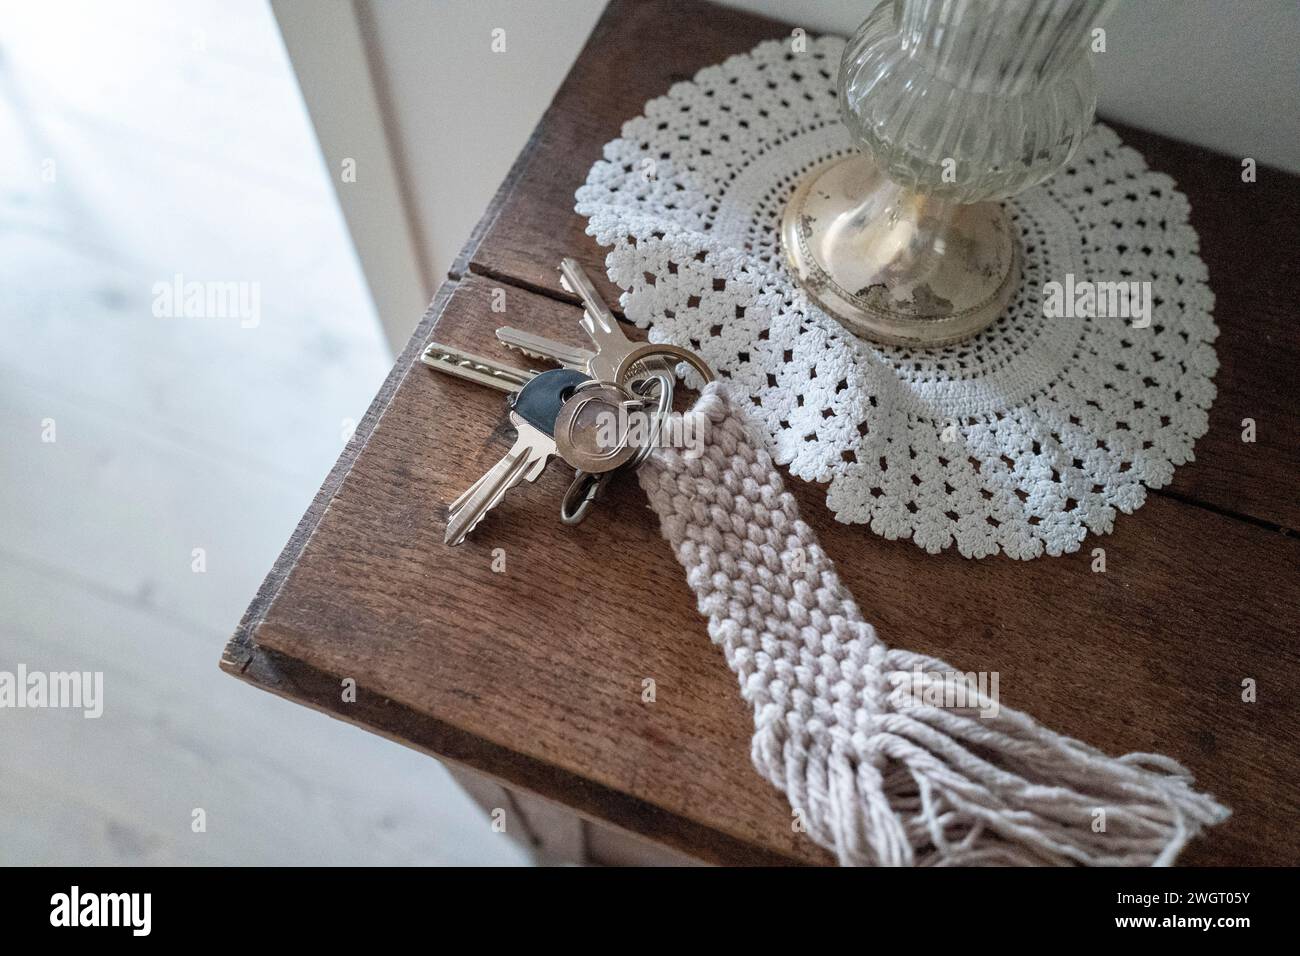 Nederland - Een sleutelbos ligt op een klein tafeltje a de hal. foto: Patricia Rehe / Hollandse Hoogte Foto Stock